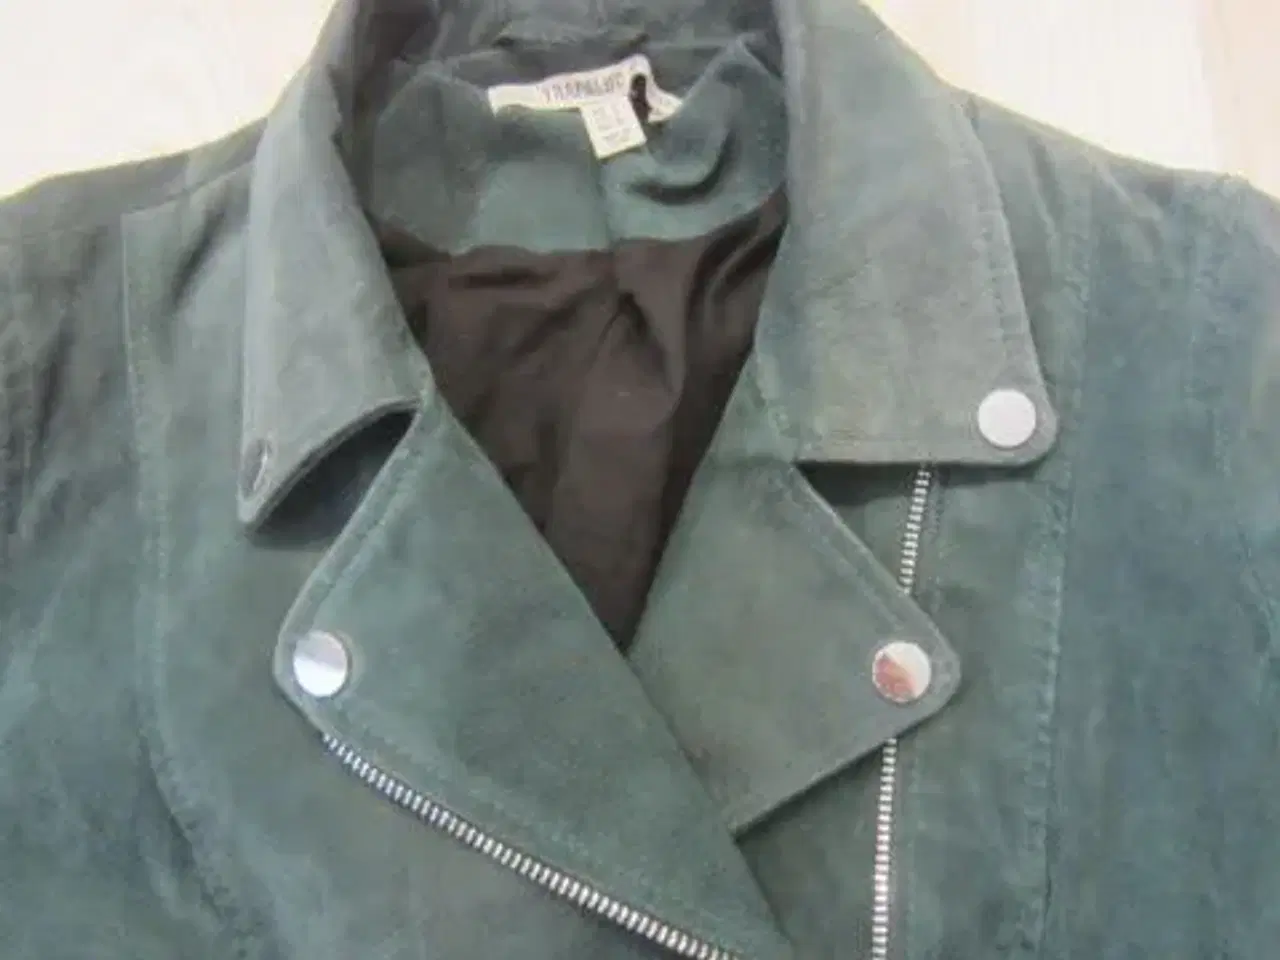 Billede 2 - Str. S, mørkegrøn jakke fra ZARA